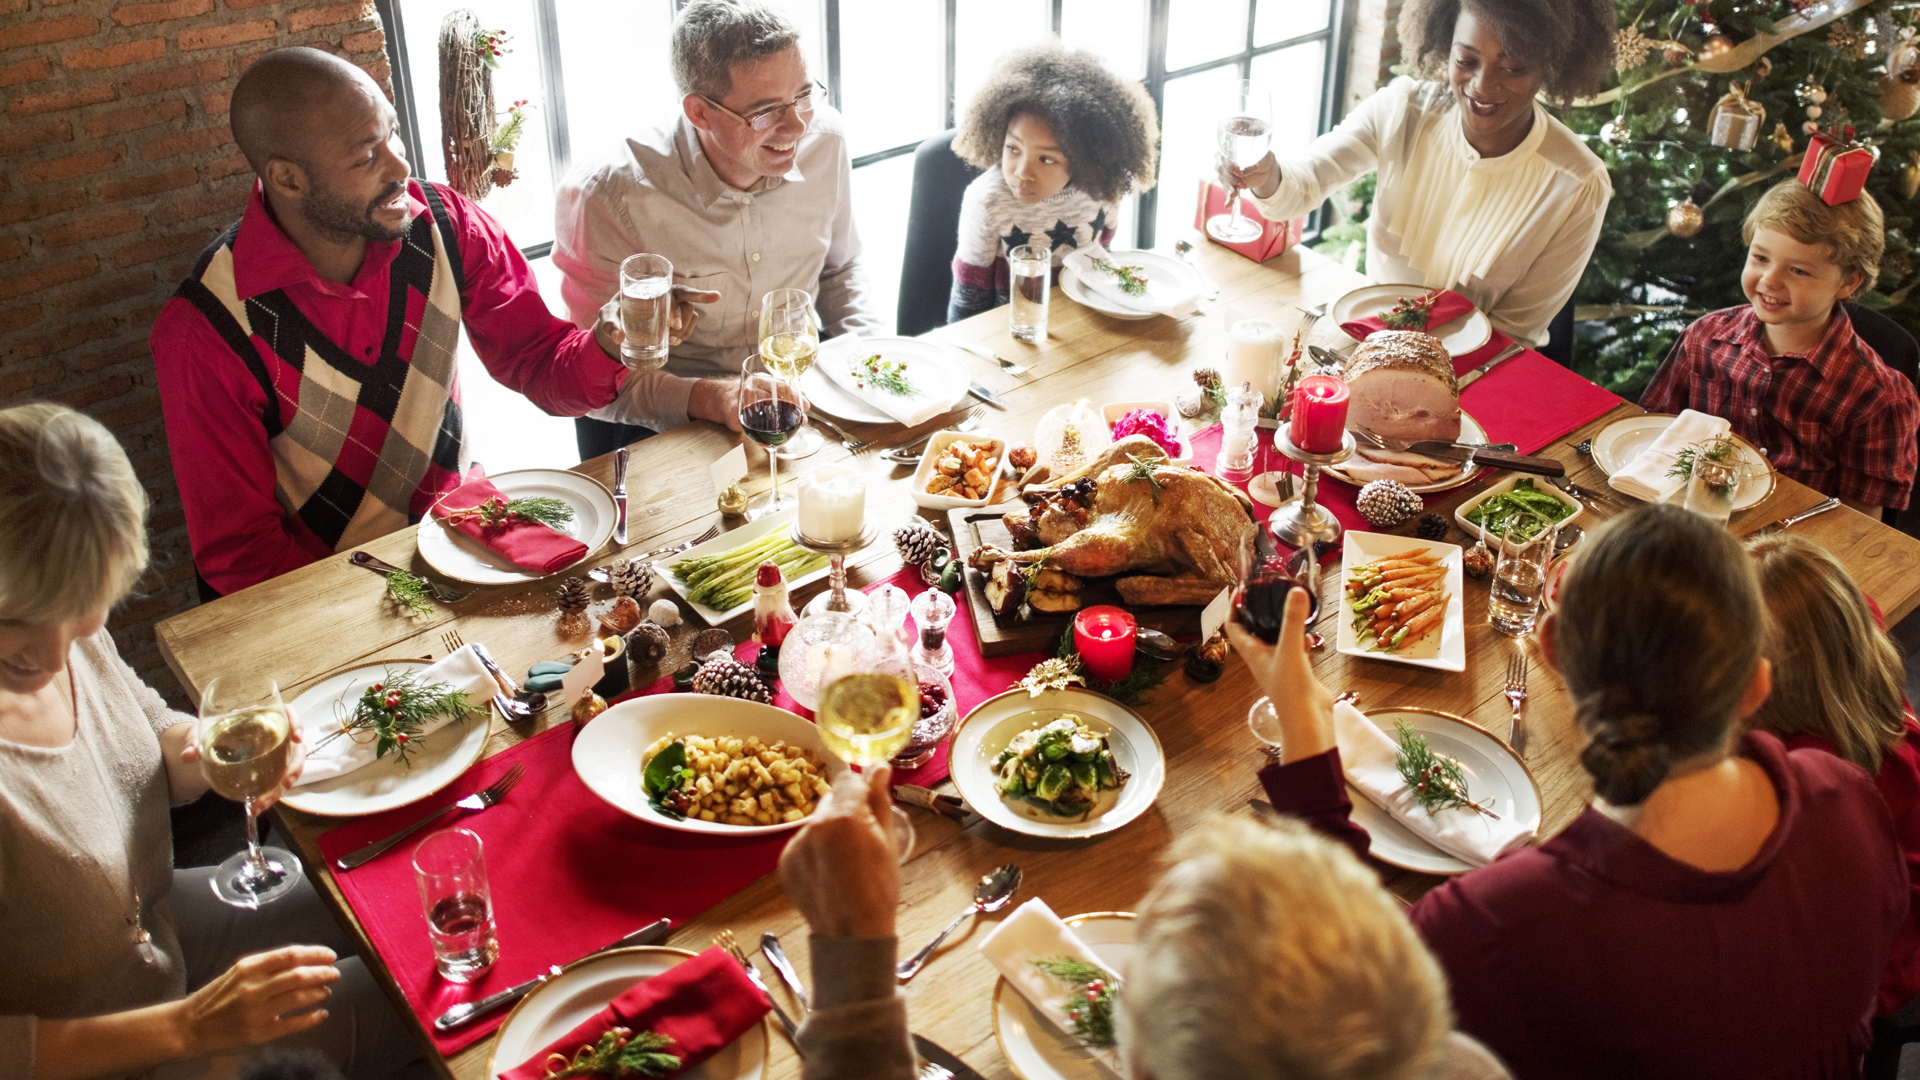 Gledelig julebord med variert julemat og vin i hjemmekoselige omgivelser.